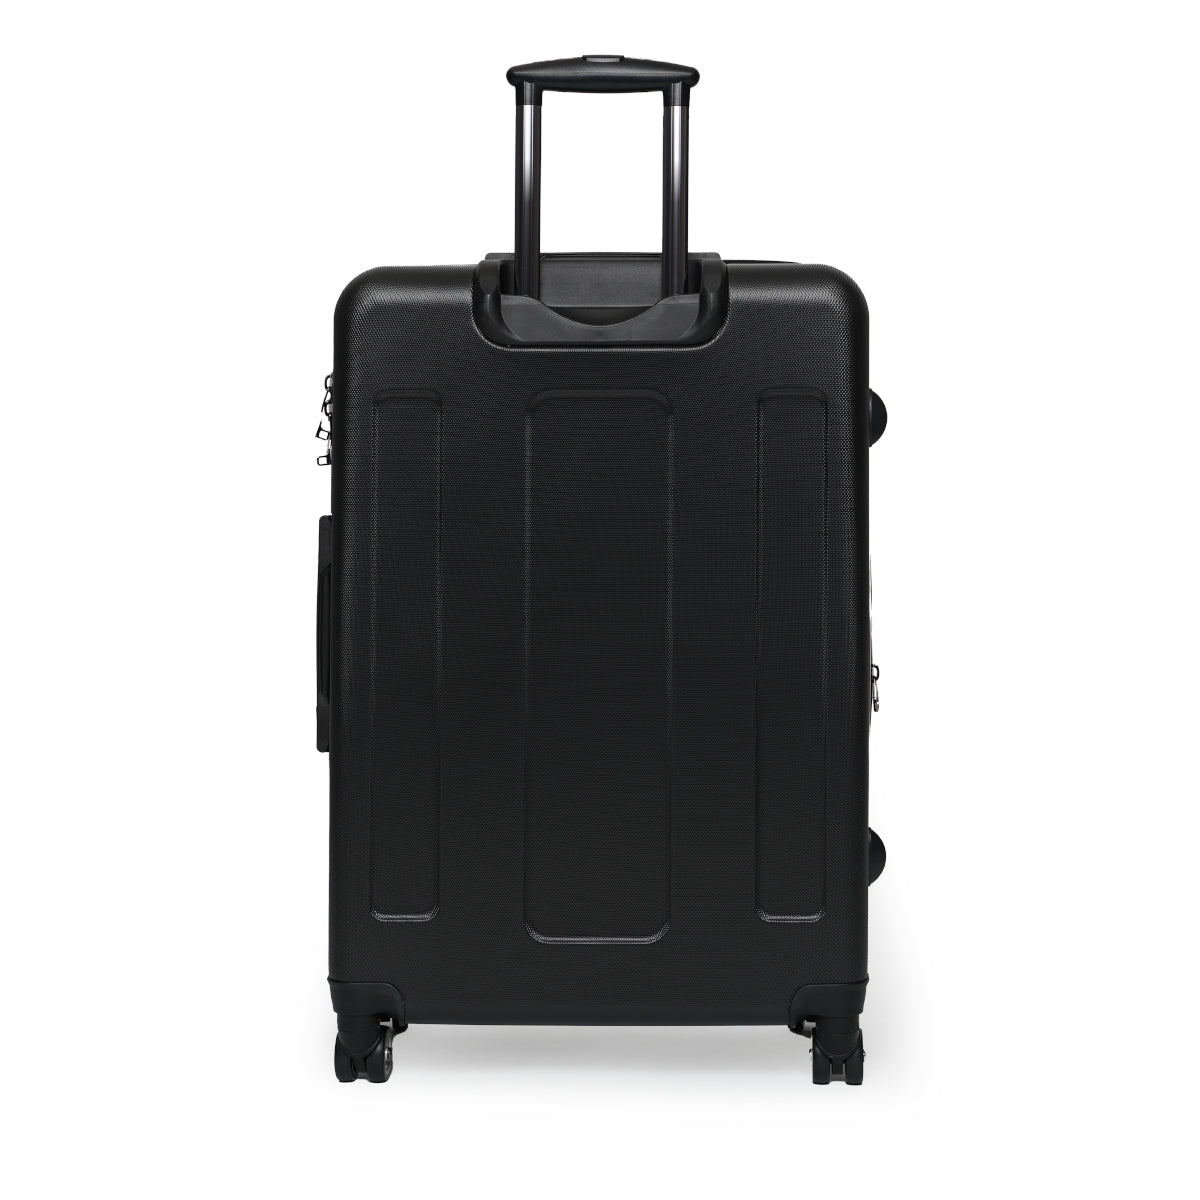 Suitcases - Polymorph design